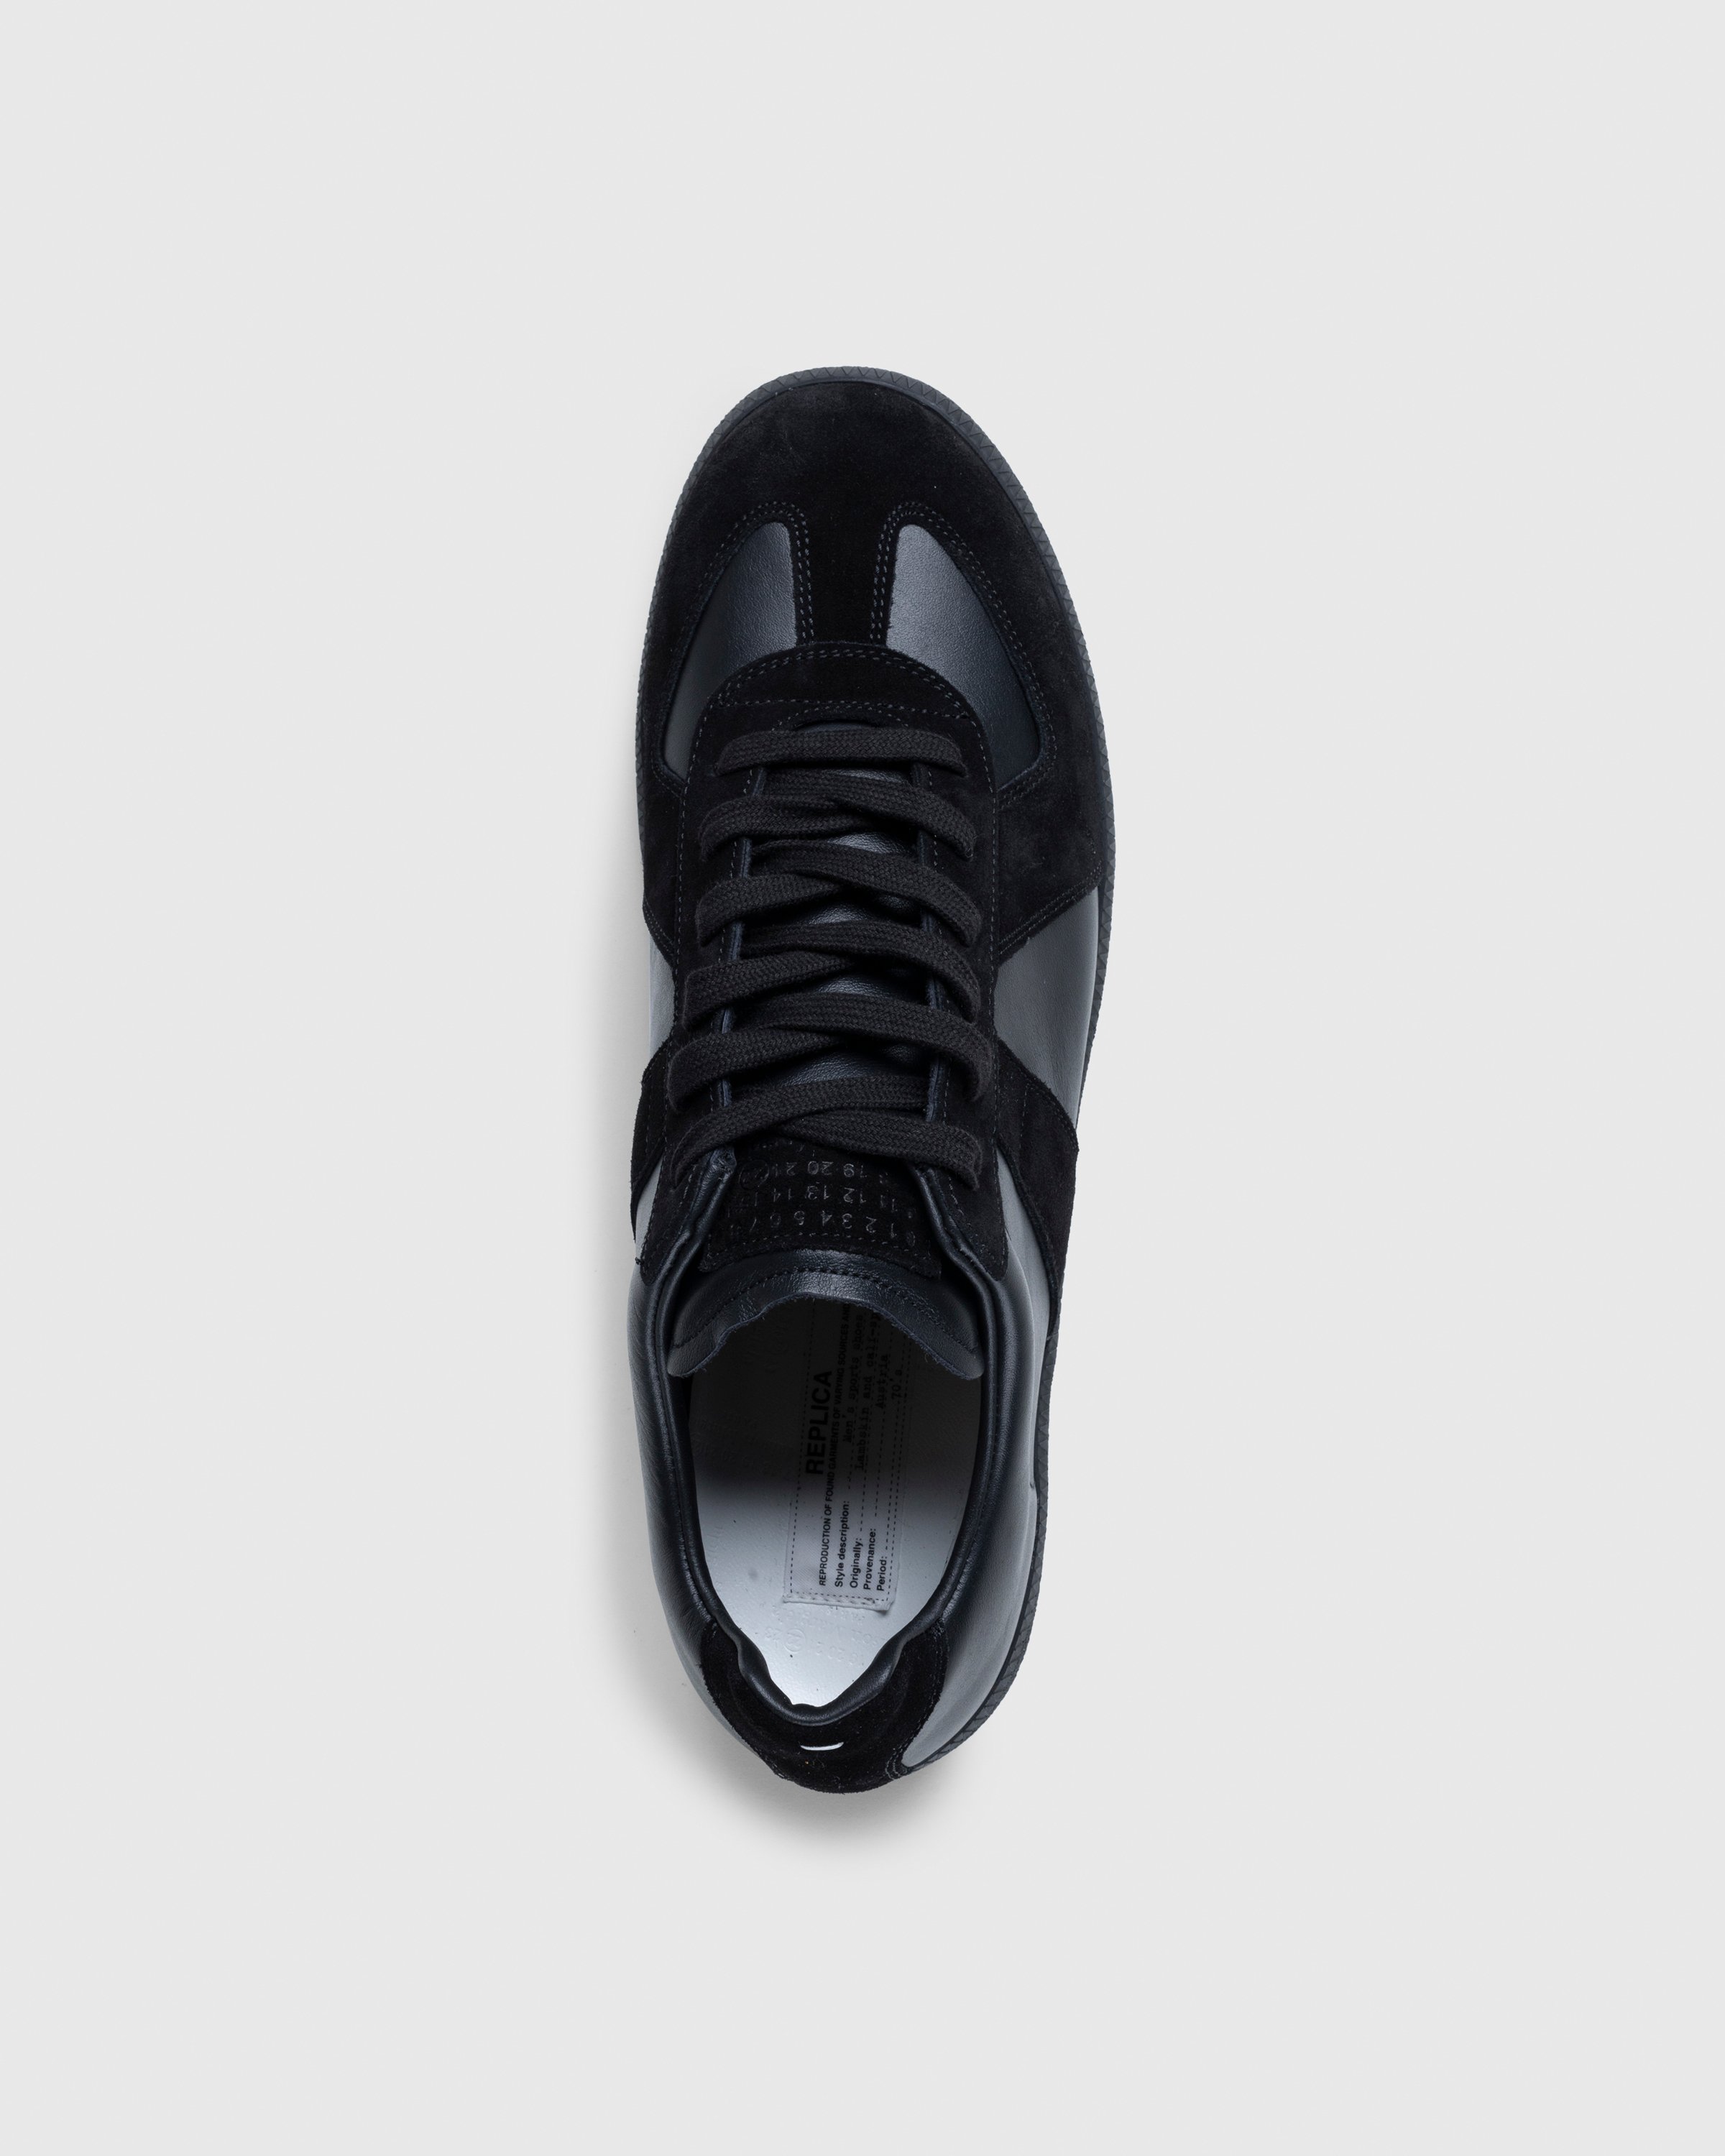 Maison Margiela - Leather Replica Sneakers Black - Footwear - Black - Image 5